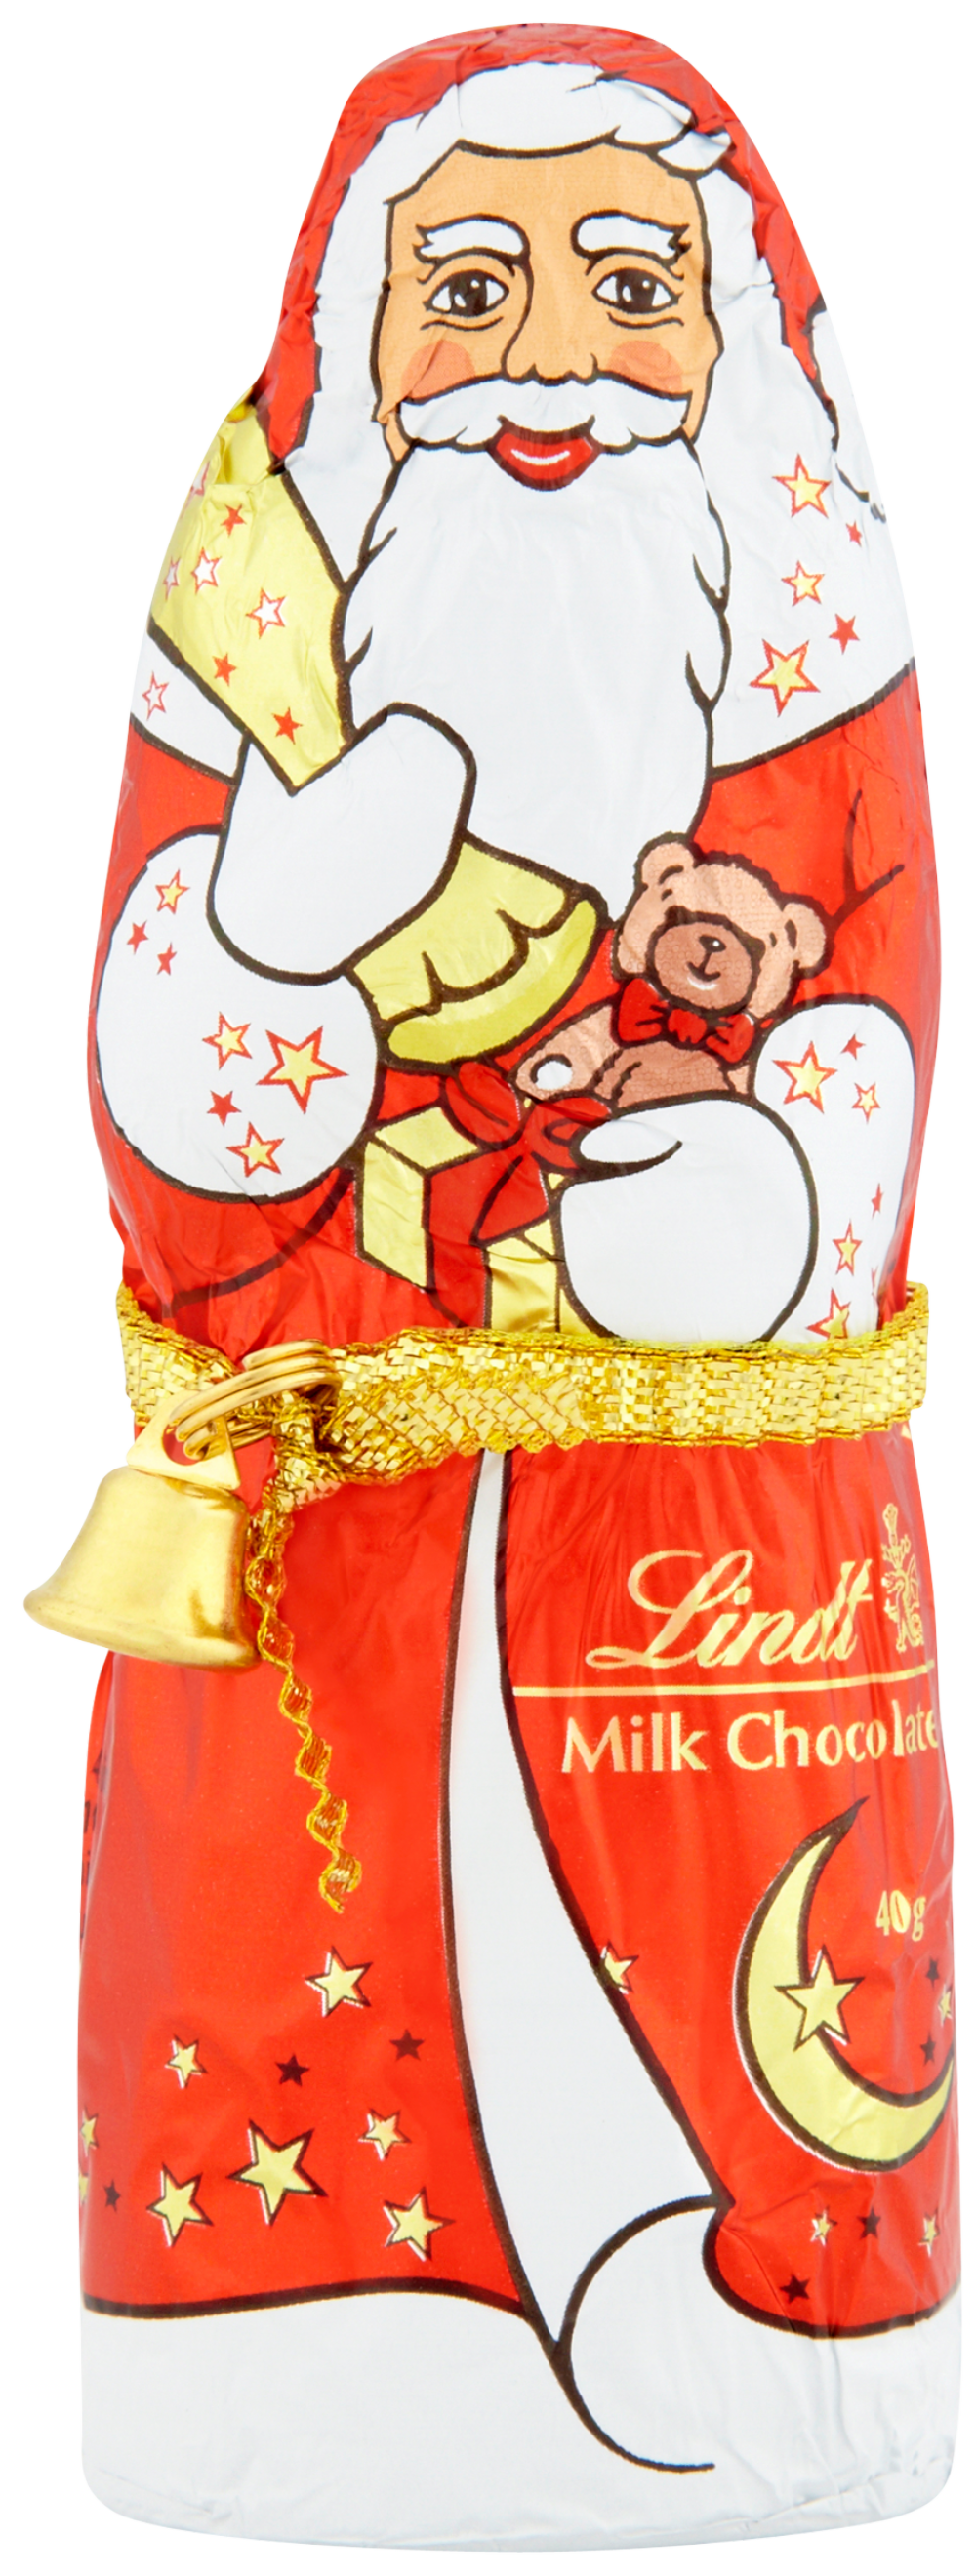 LINDT Milk Chocolate Santa 40g